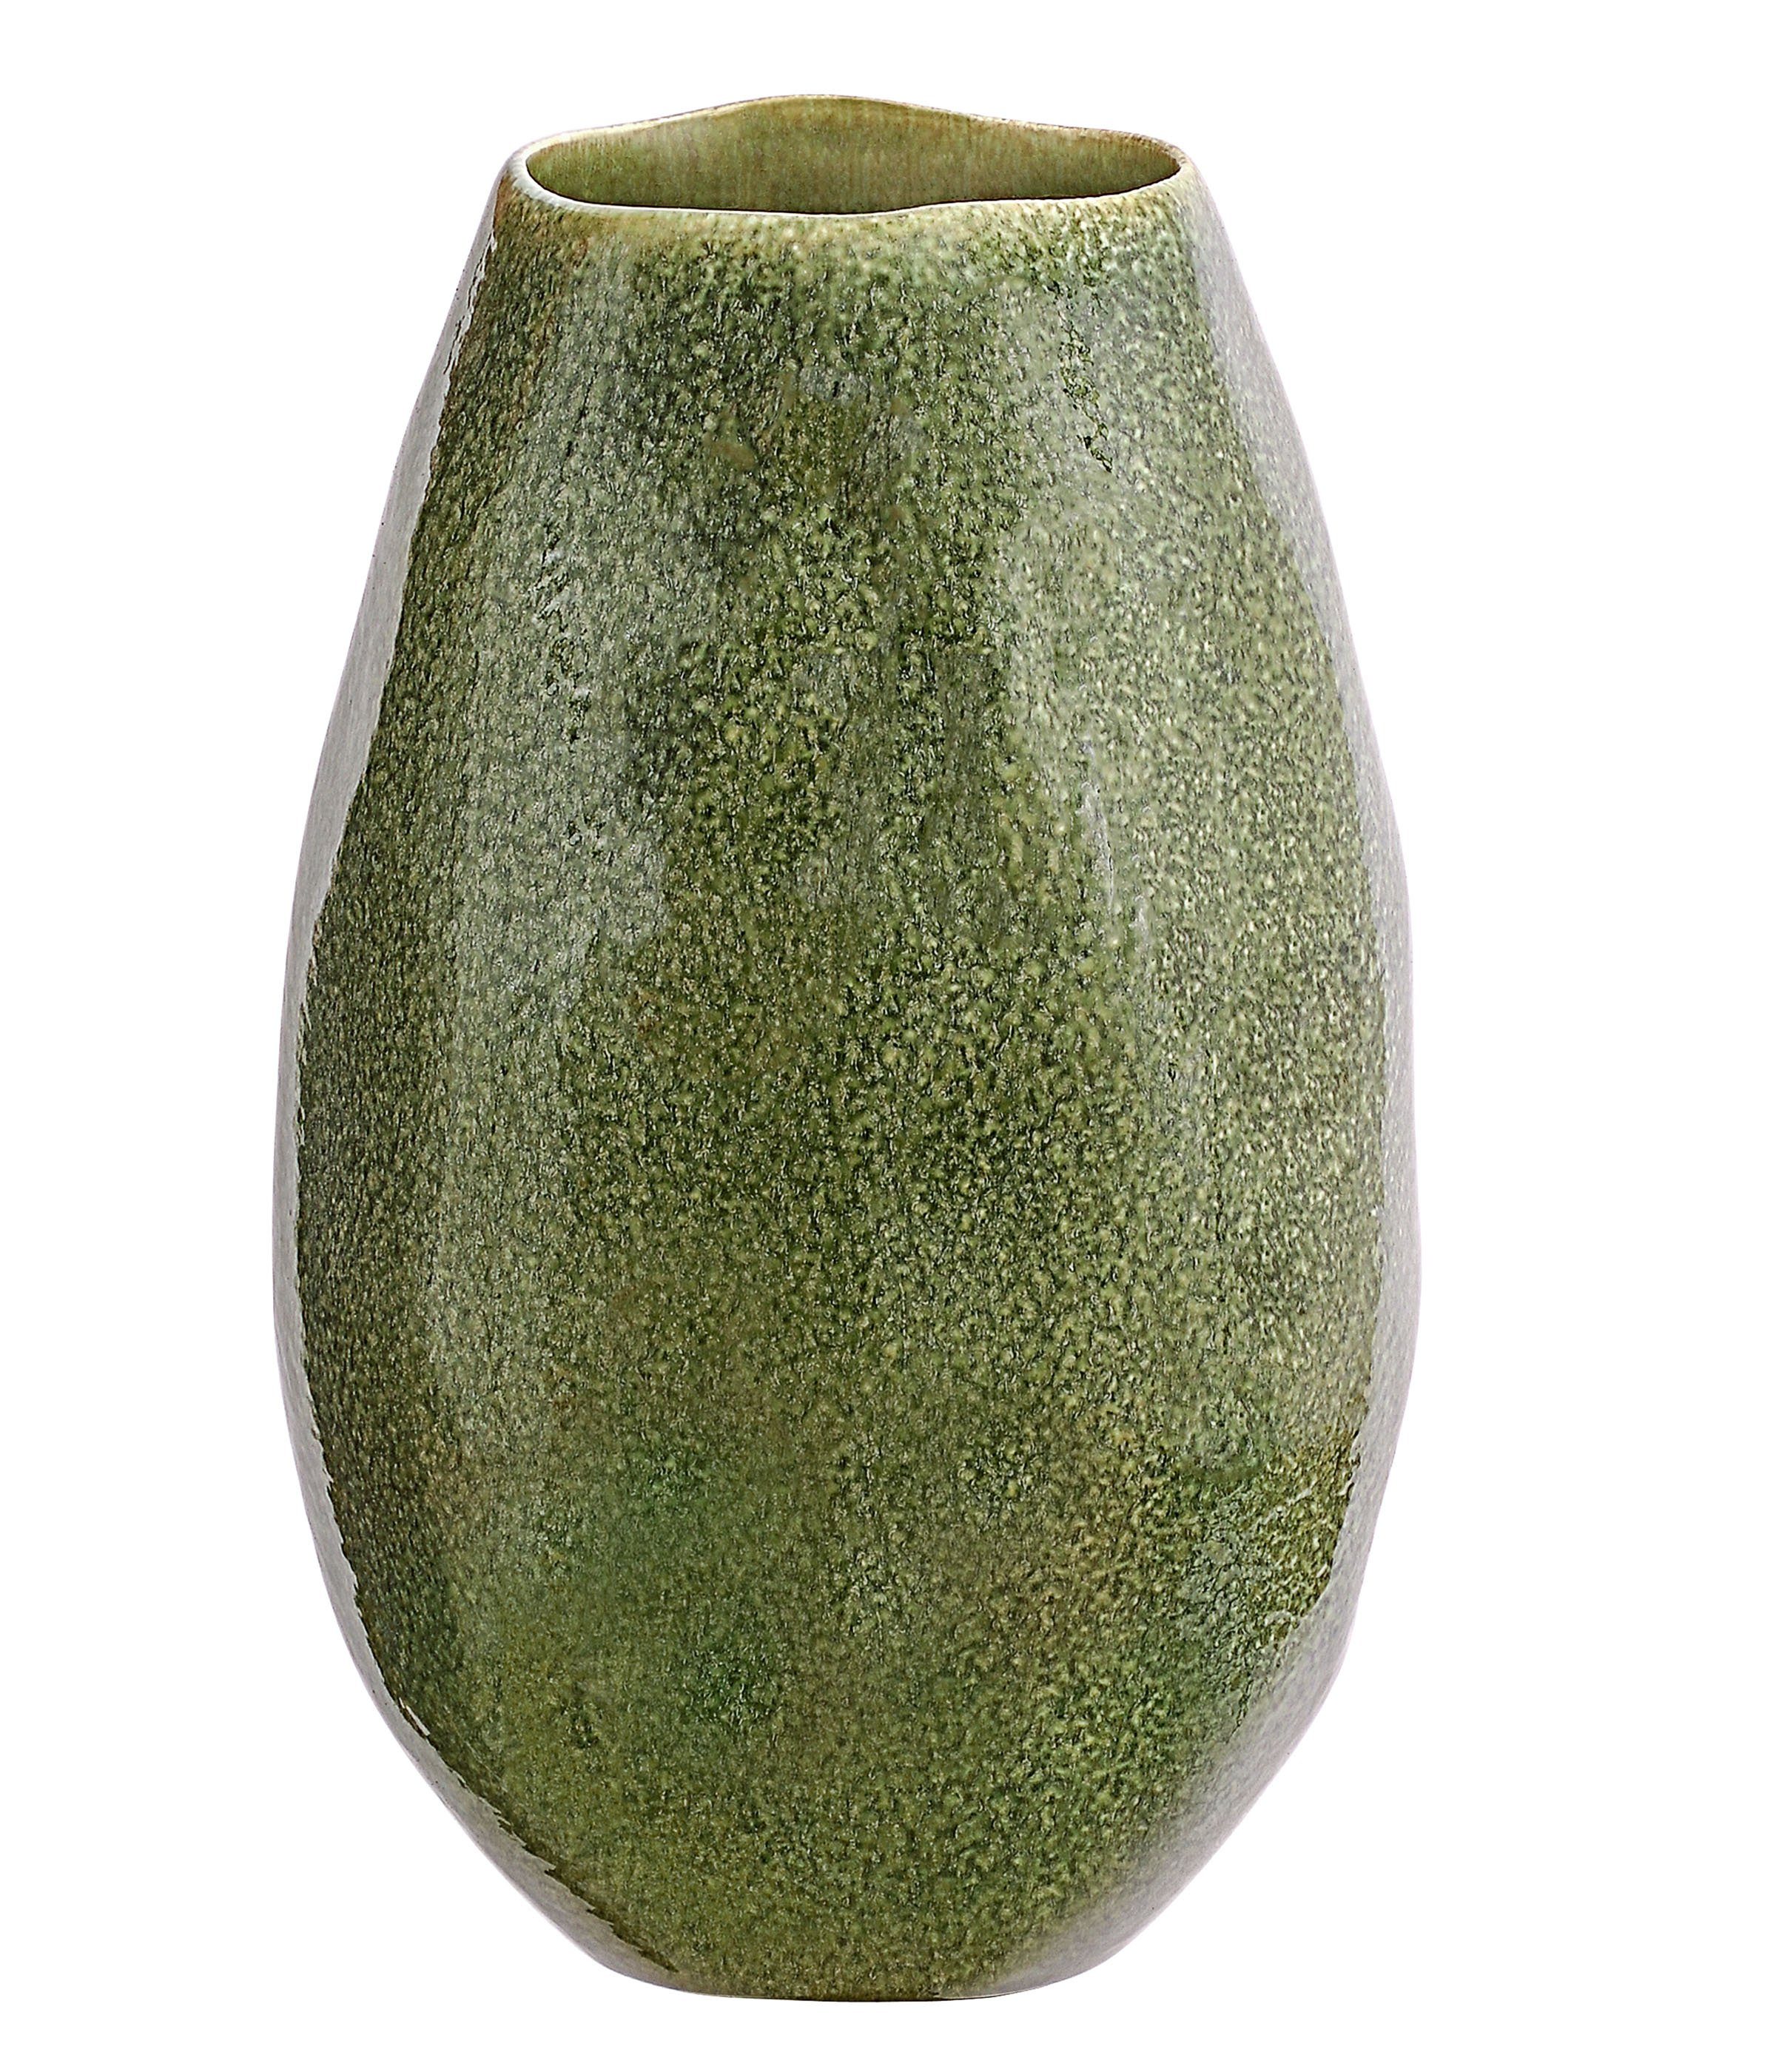 Dehner Übertopf Vase Linn, Keramik, lasiert, dunkelgrün, handgefertige Blumenvase oder als Übertopf